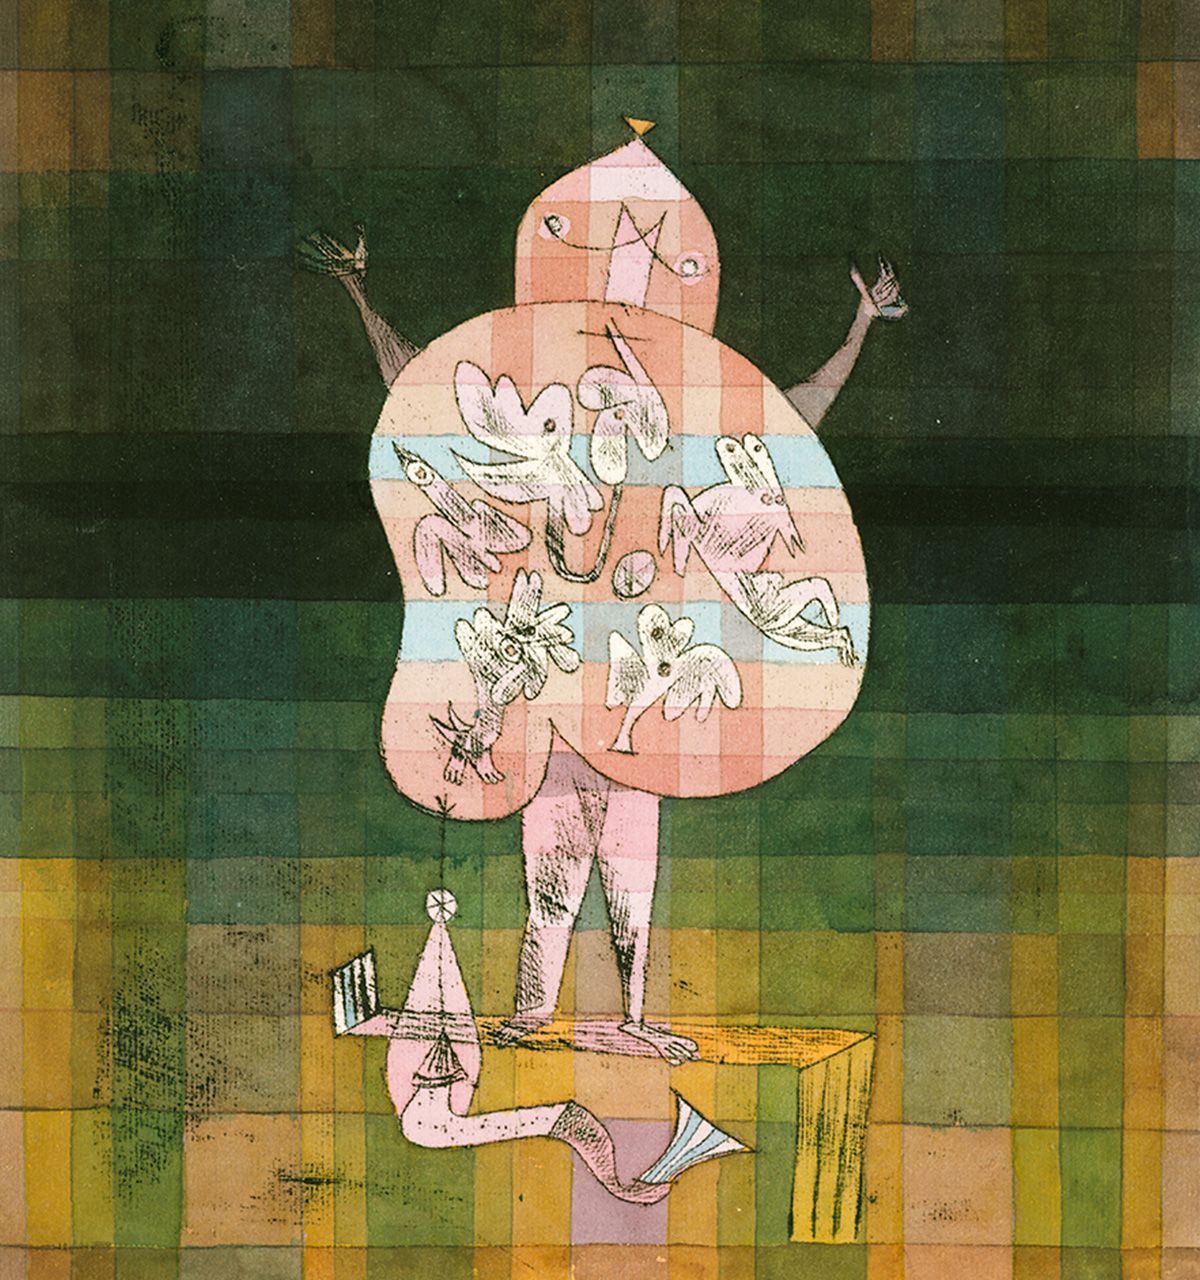 Humor and Fantasy—The Berggruen Paul Klee Collection | The Metropolitan